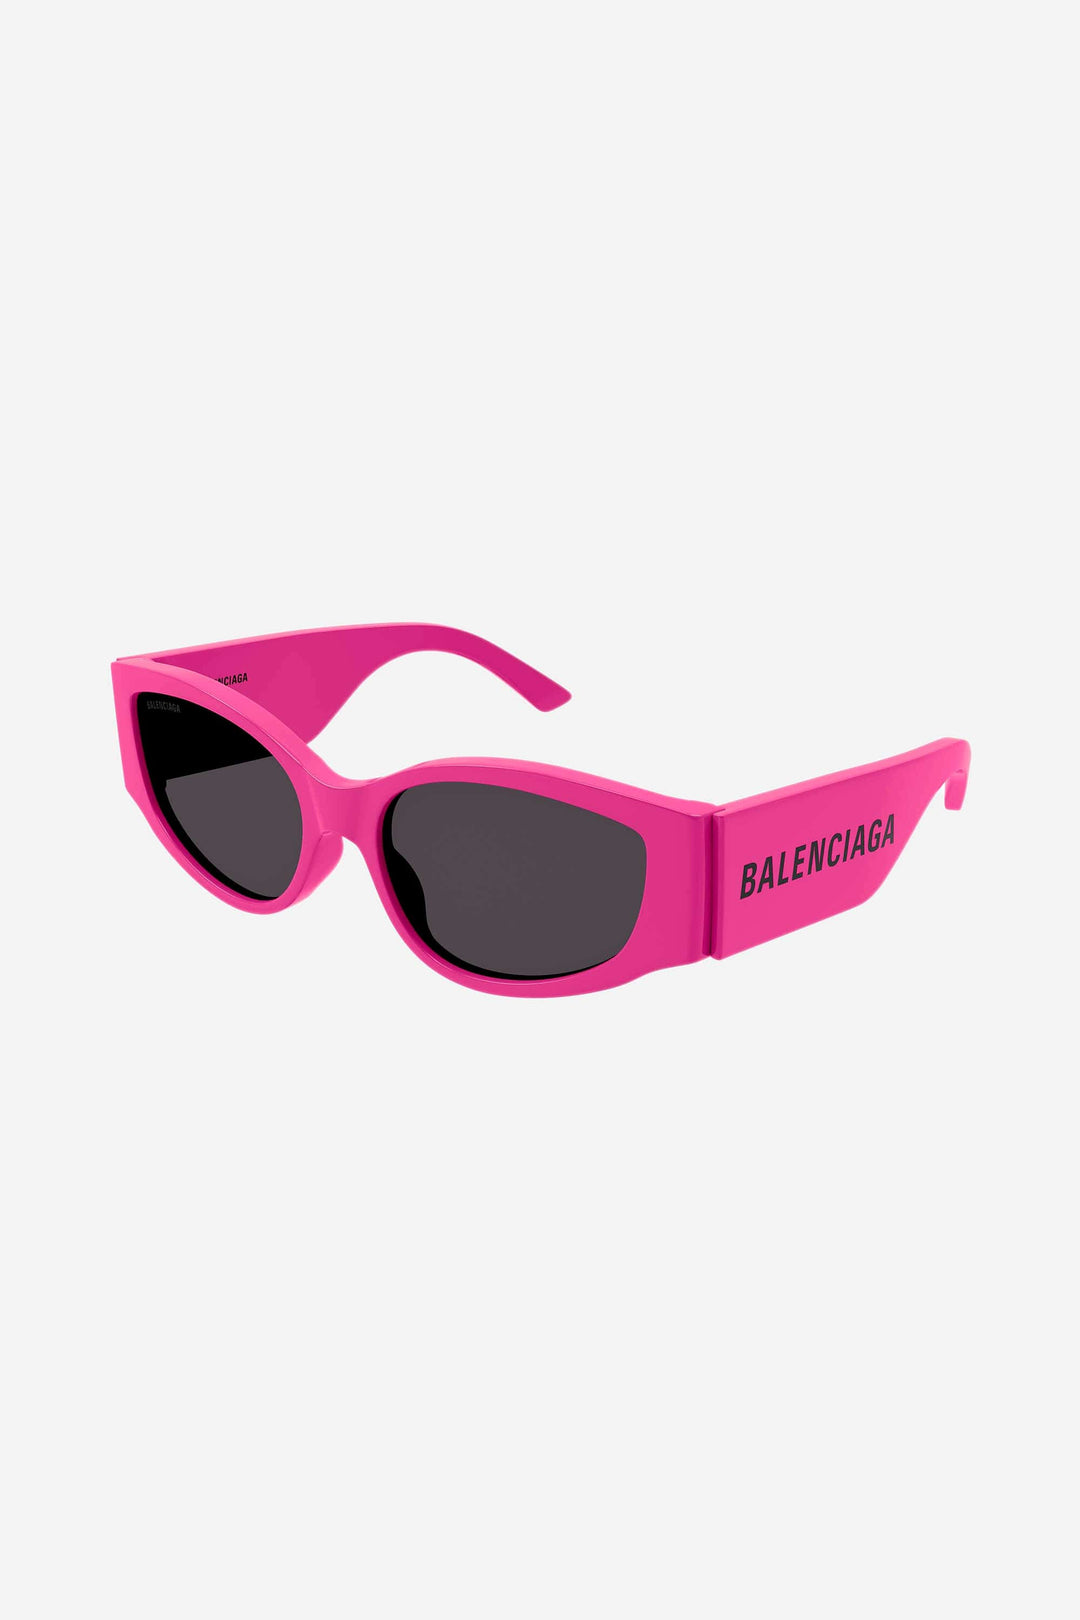 Balenciaga chunky pink sunglasses - Eyewear Club